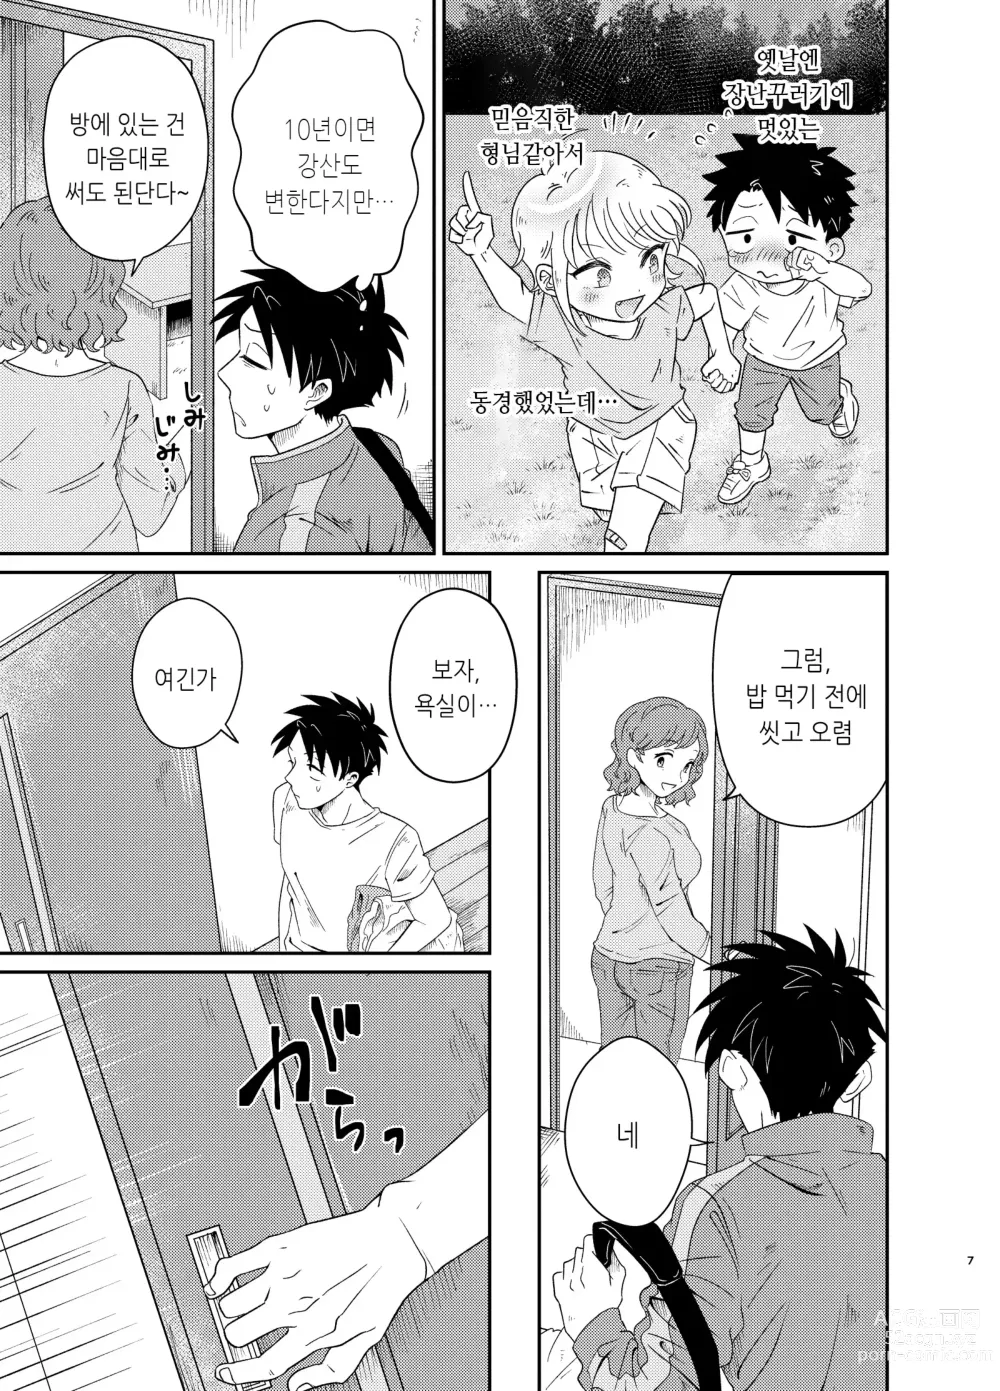 Page 7 of doujinshi 엄청 귀엽고 야한 사촌은 좋아하세요?